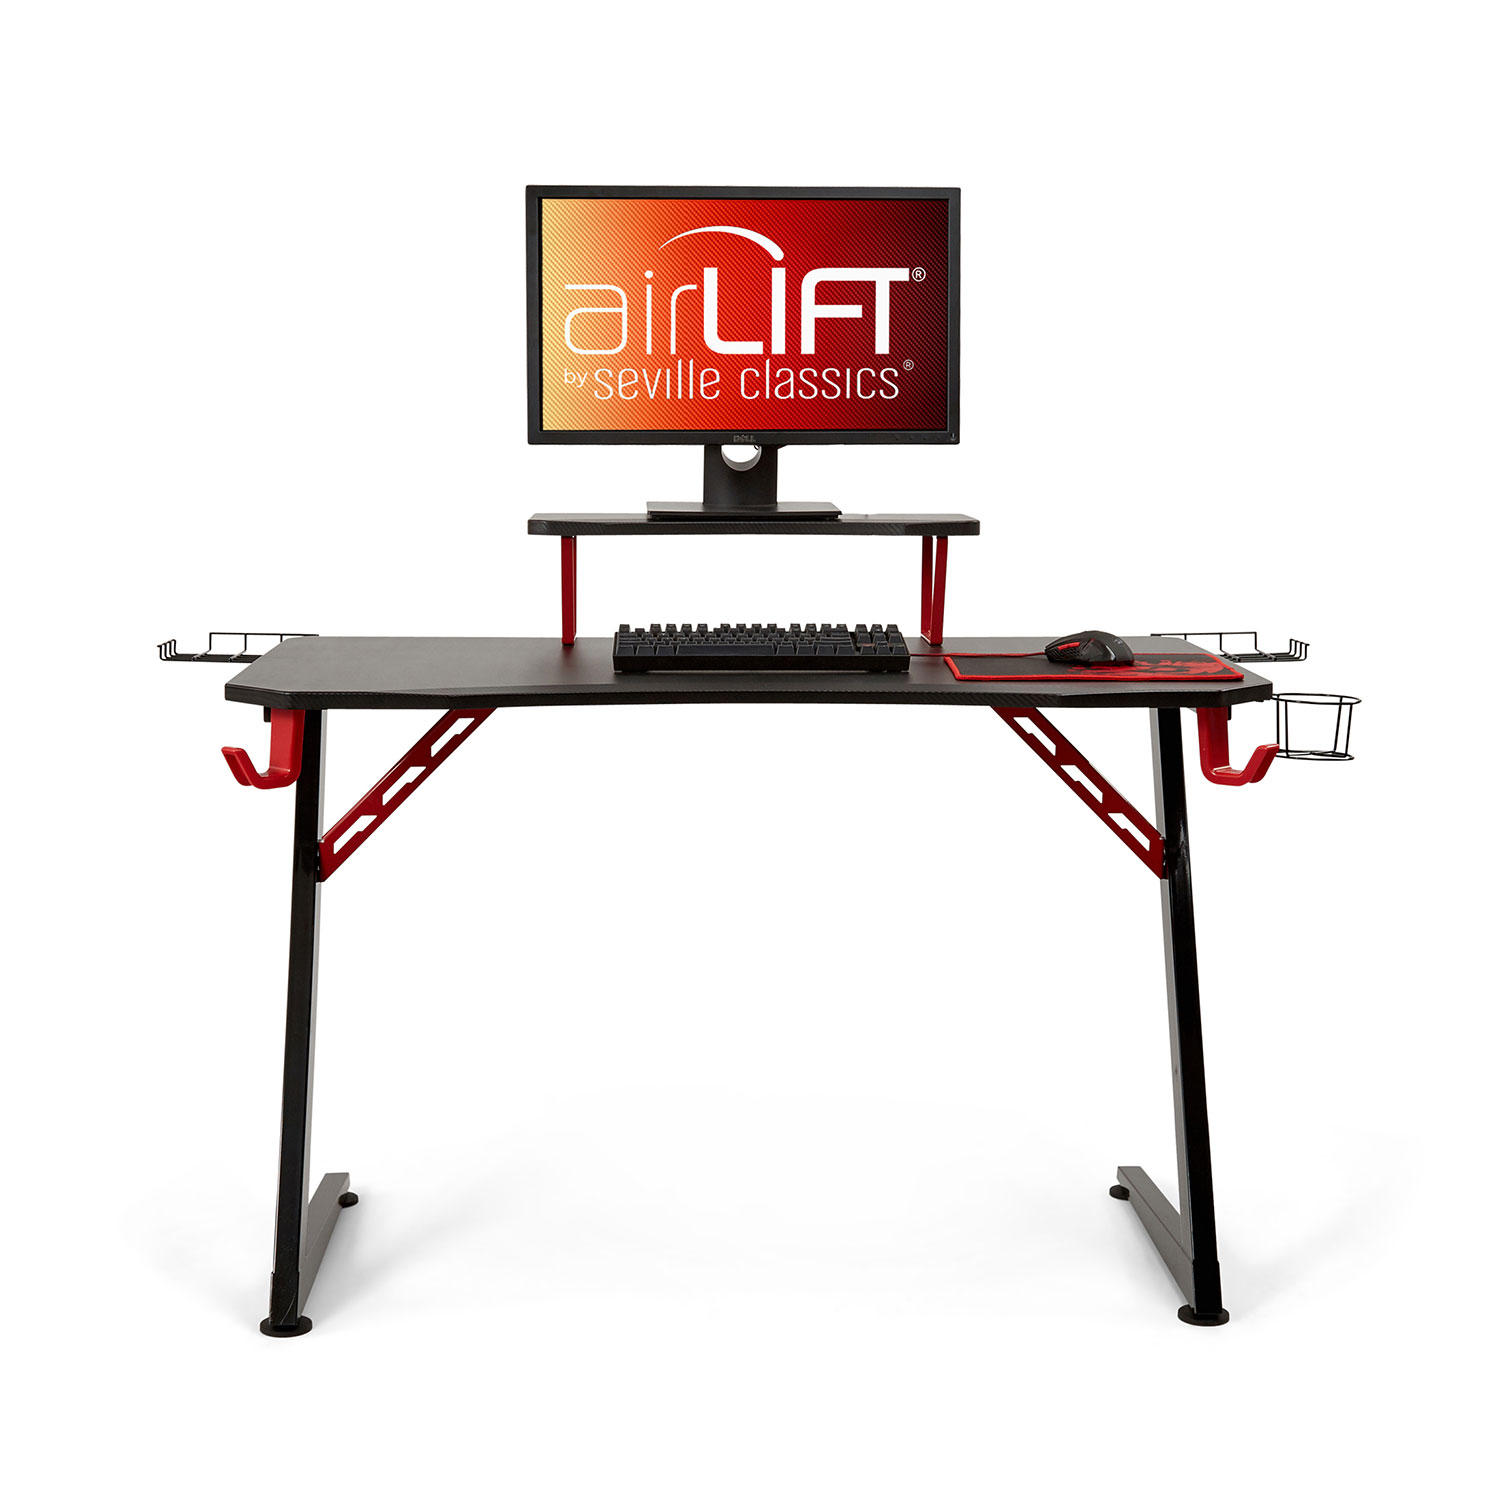 Seville Classics airLIFT 47.2' Elite Computer Gaming Desk Removable Riser